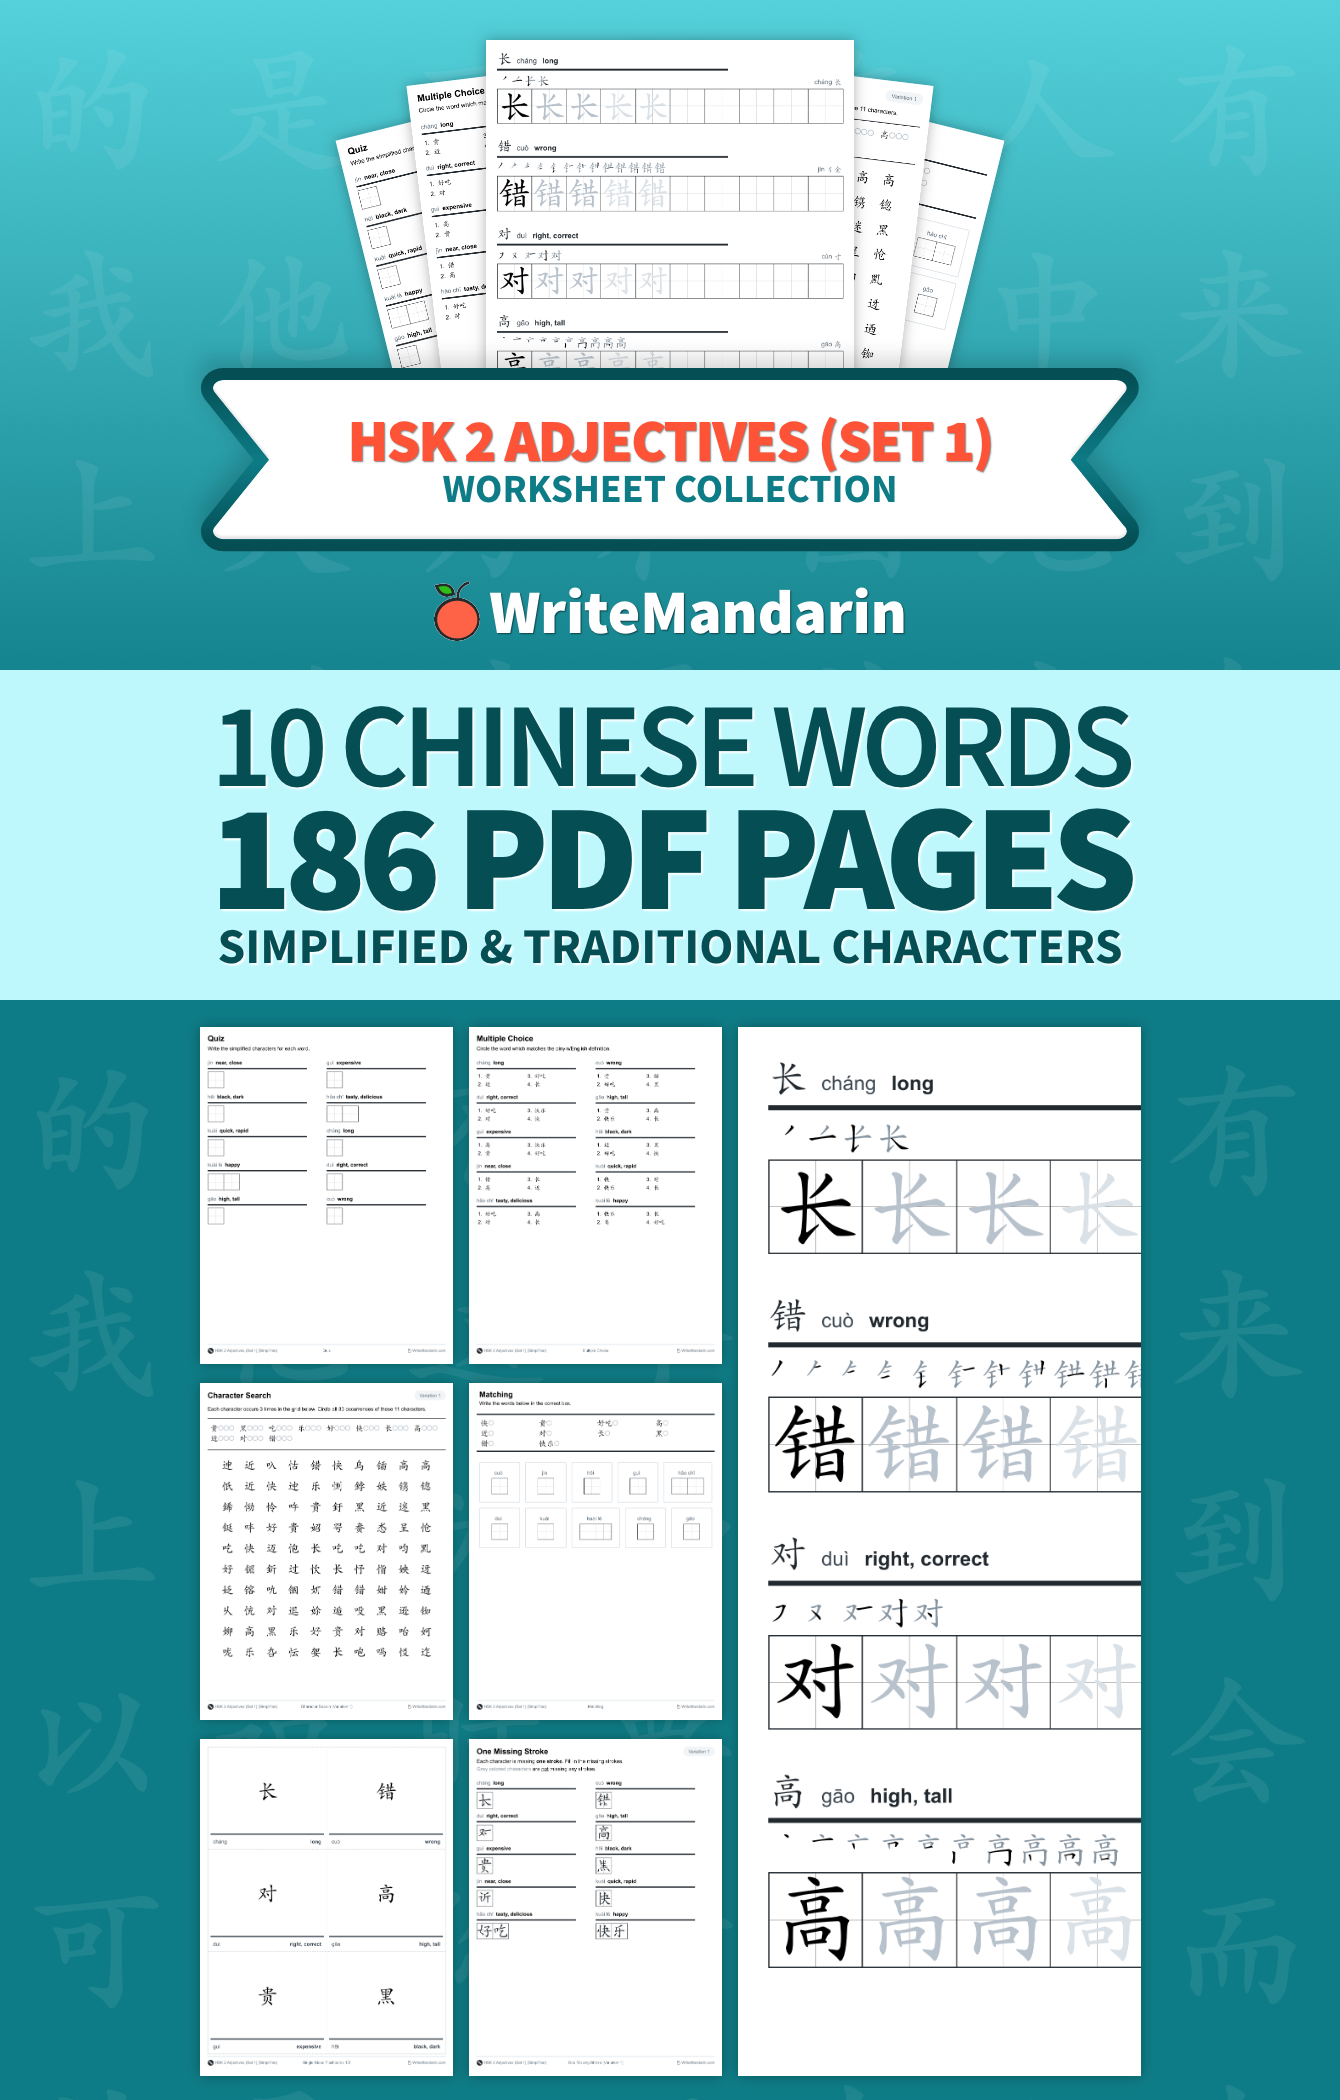 Preview image of HSK 2 Adjectives (Set 1) worksheet collection